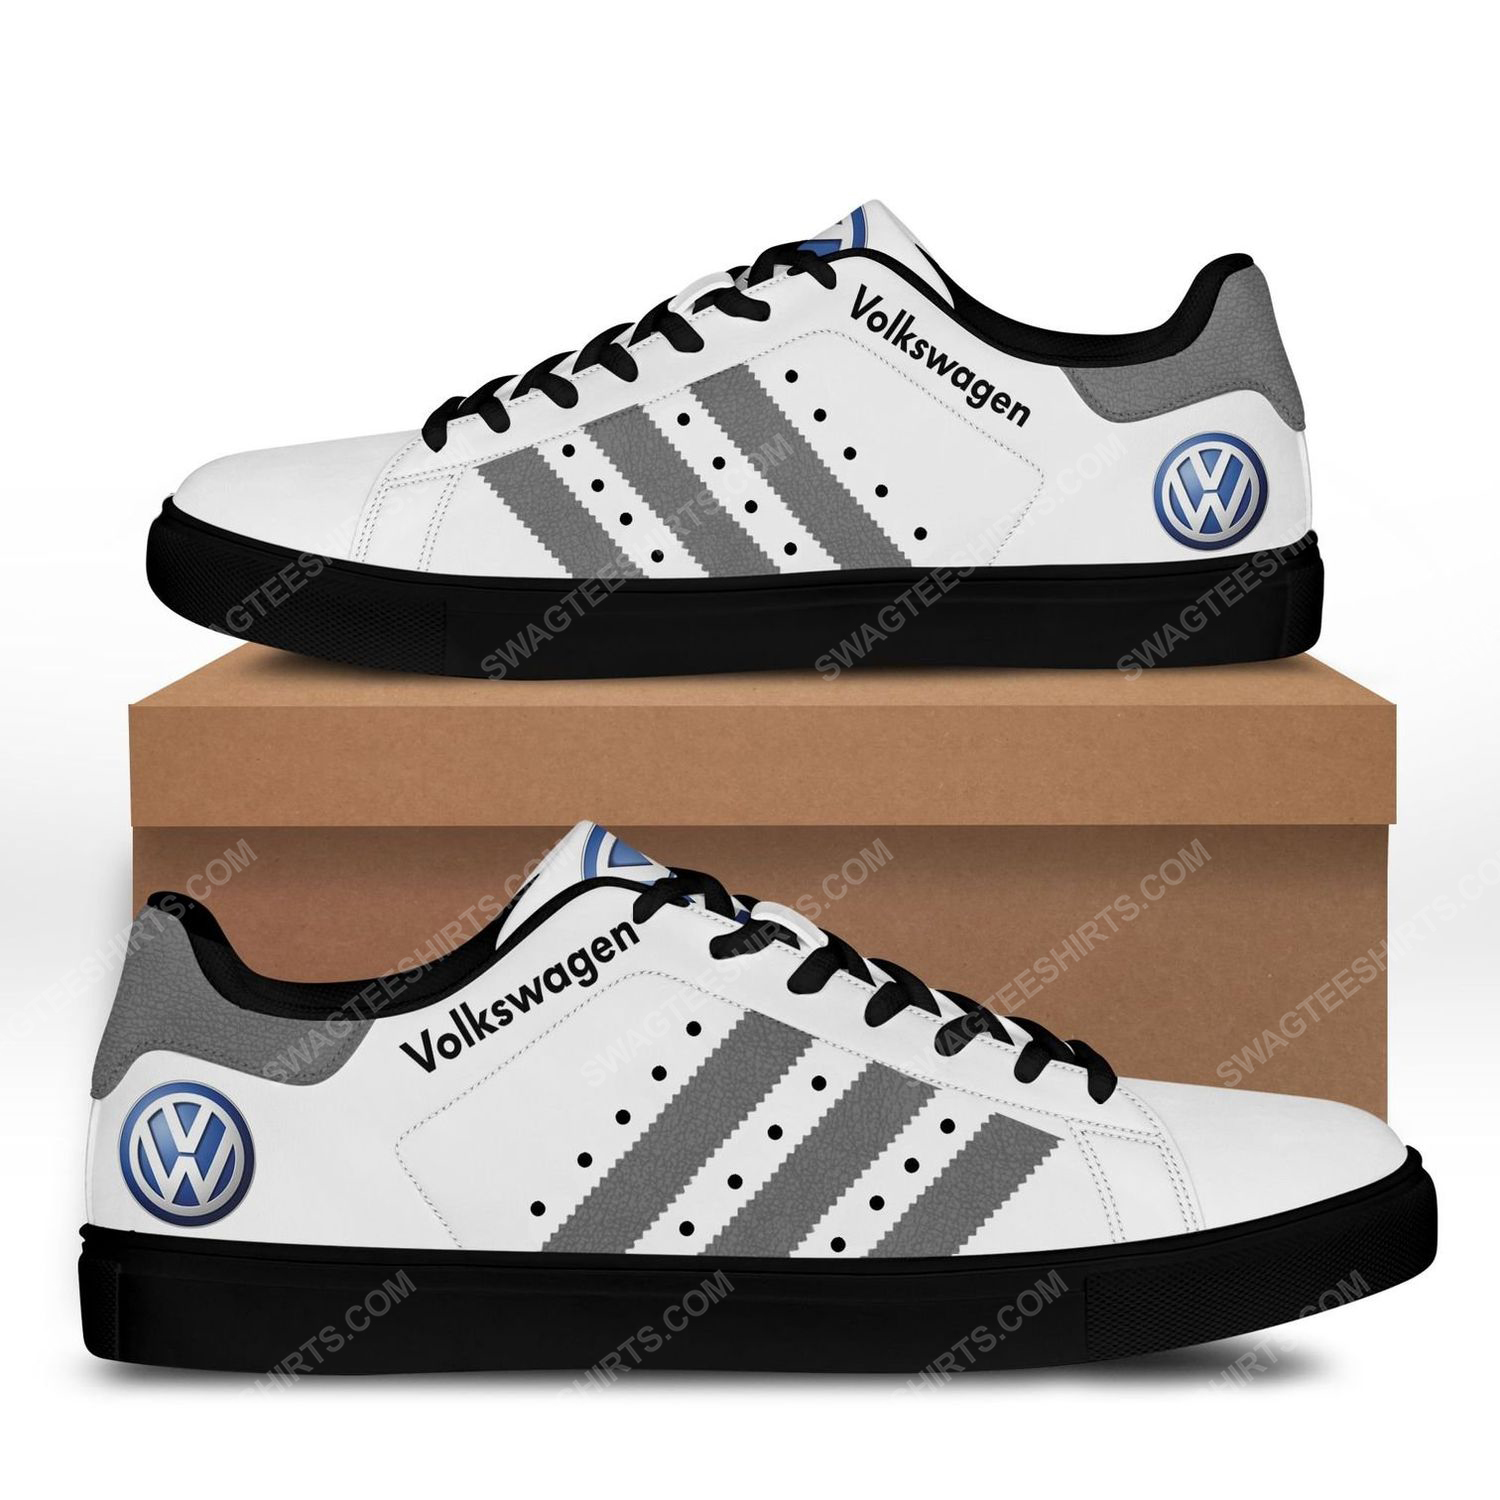 The volkswagen version grey stan smith shoes - black 1